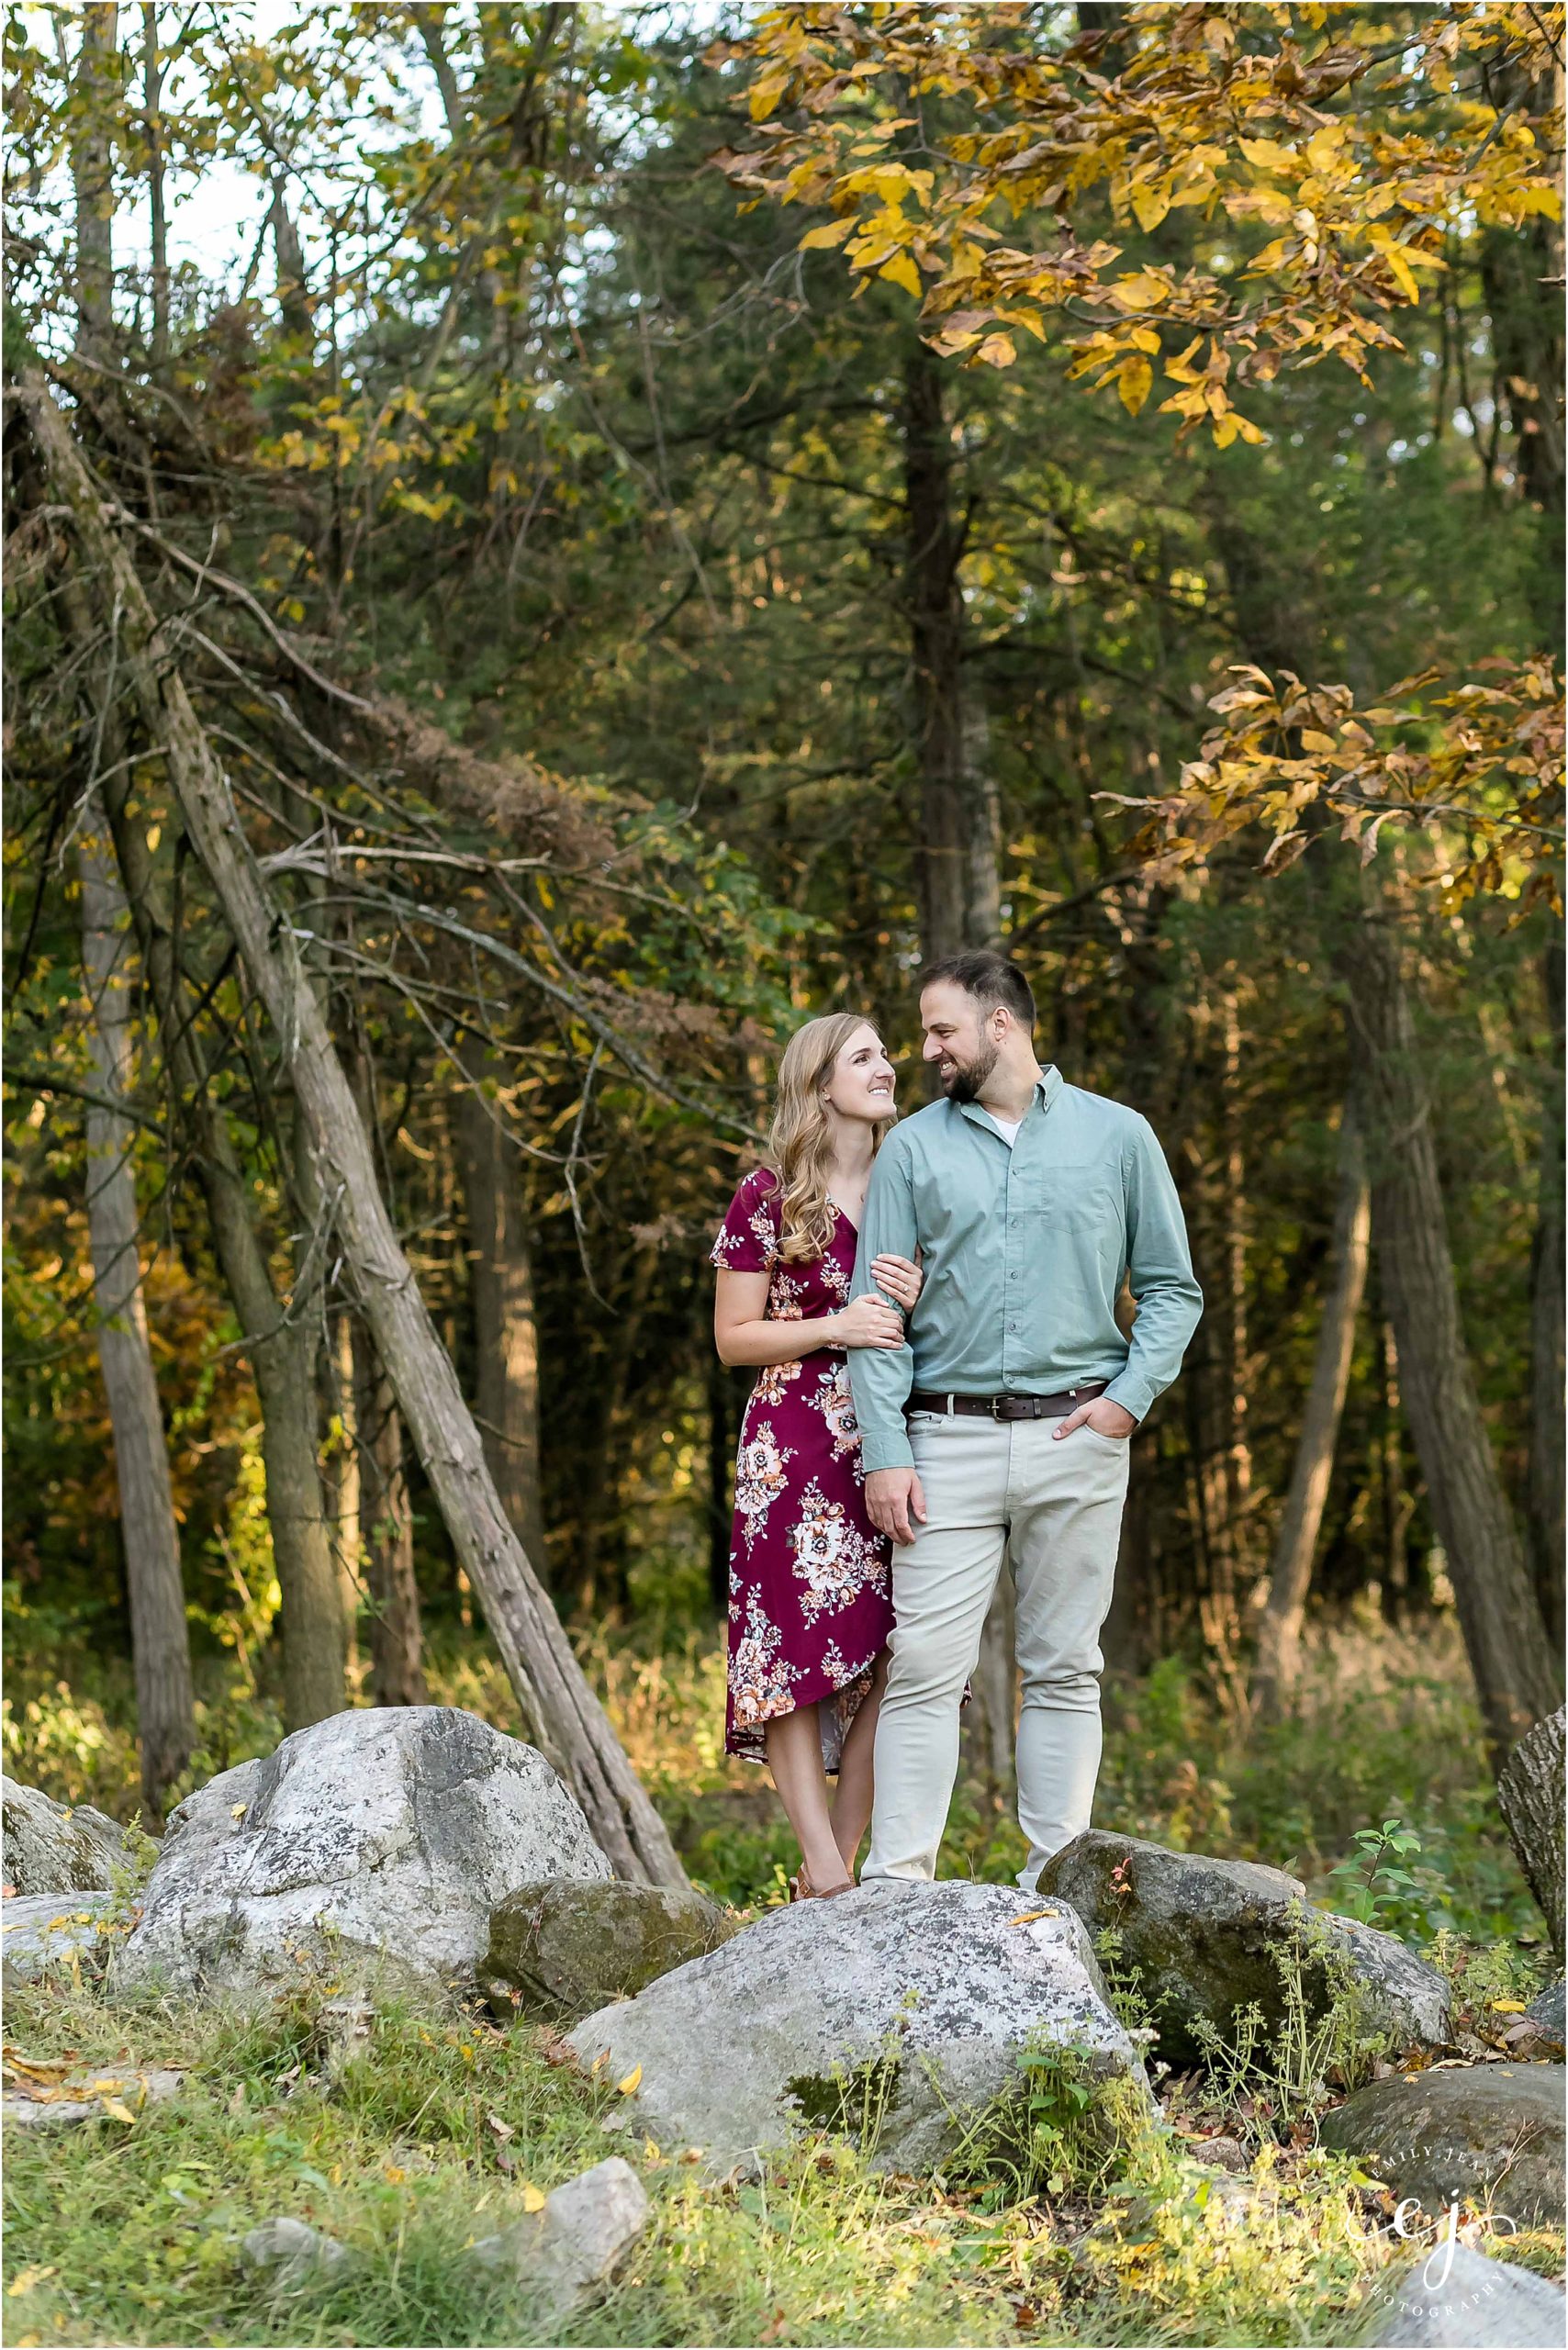 uw arboretum engagement session photographer wisconsin smiling at camera hugging large rocks standing